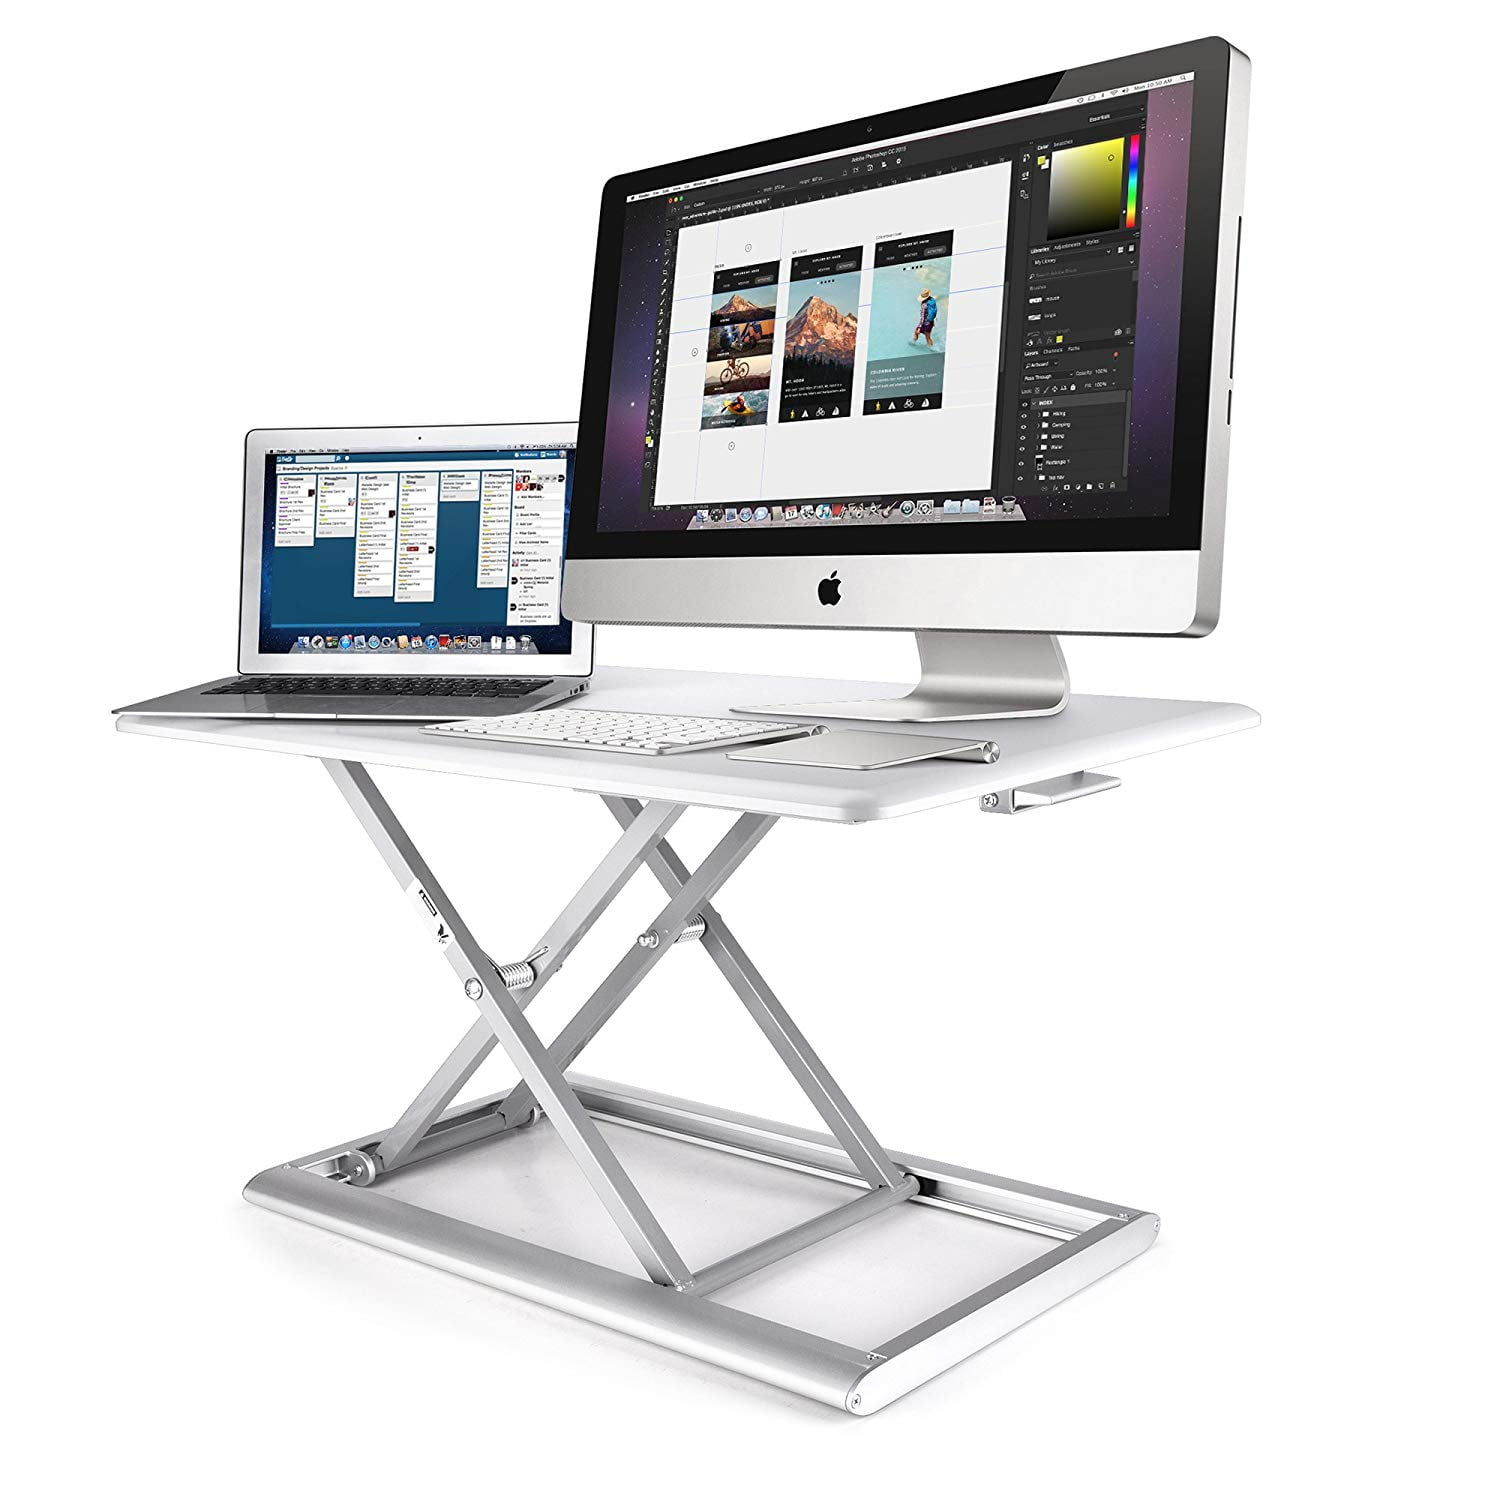 Abovetek Compact Solid Aluminum Standing Desk 30 Desktop